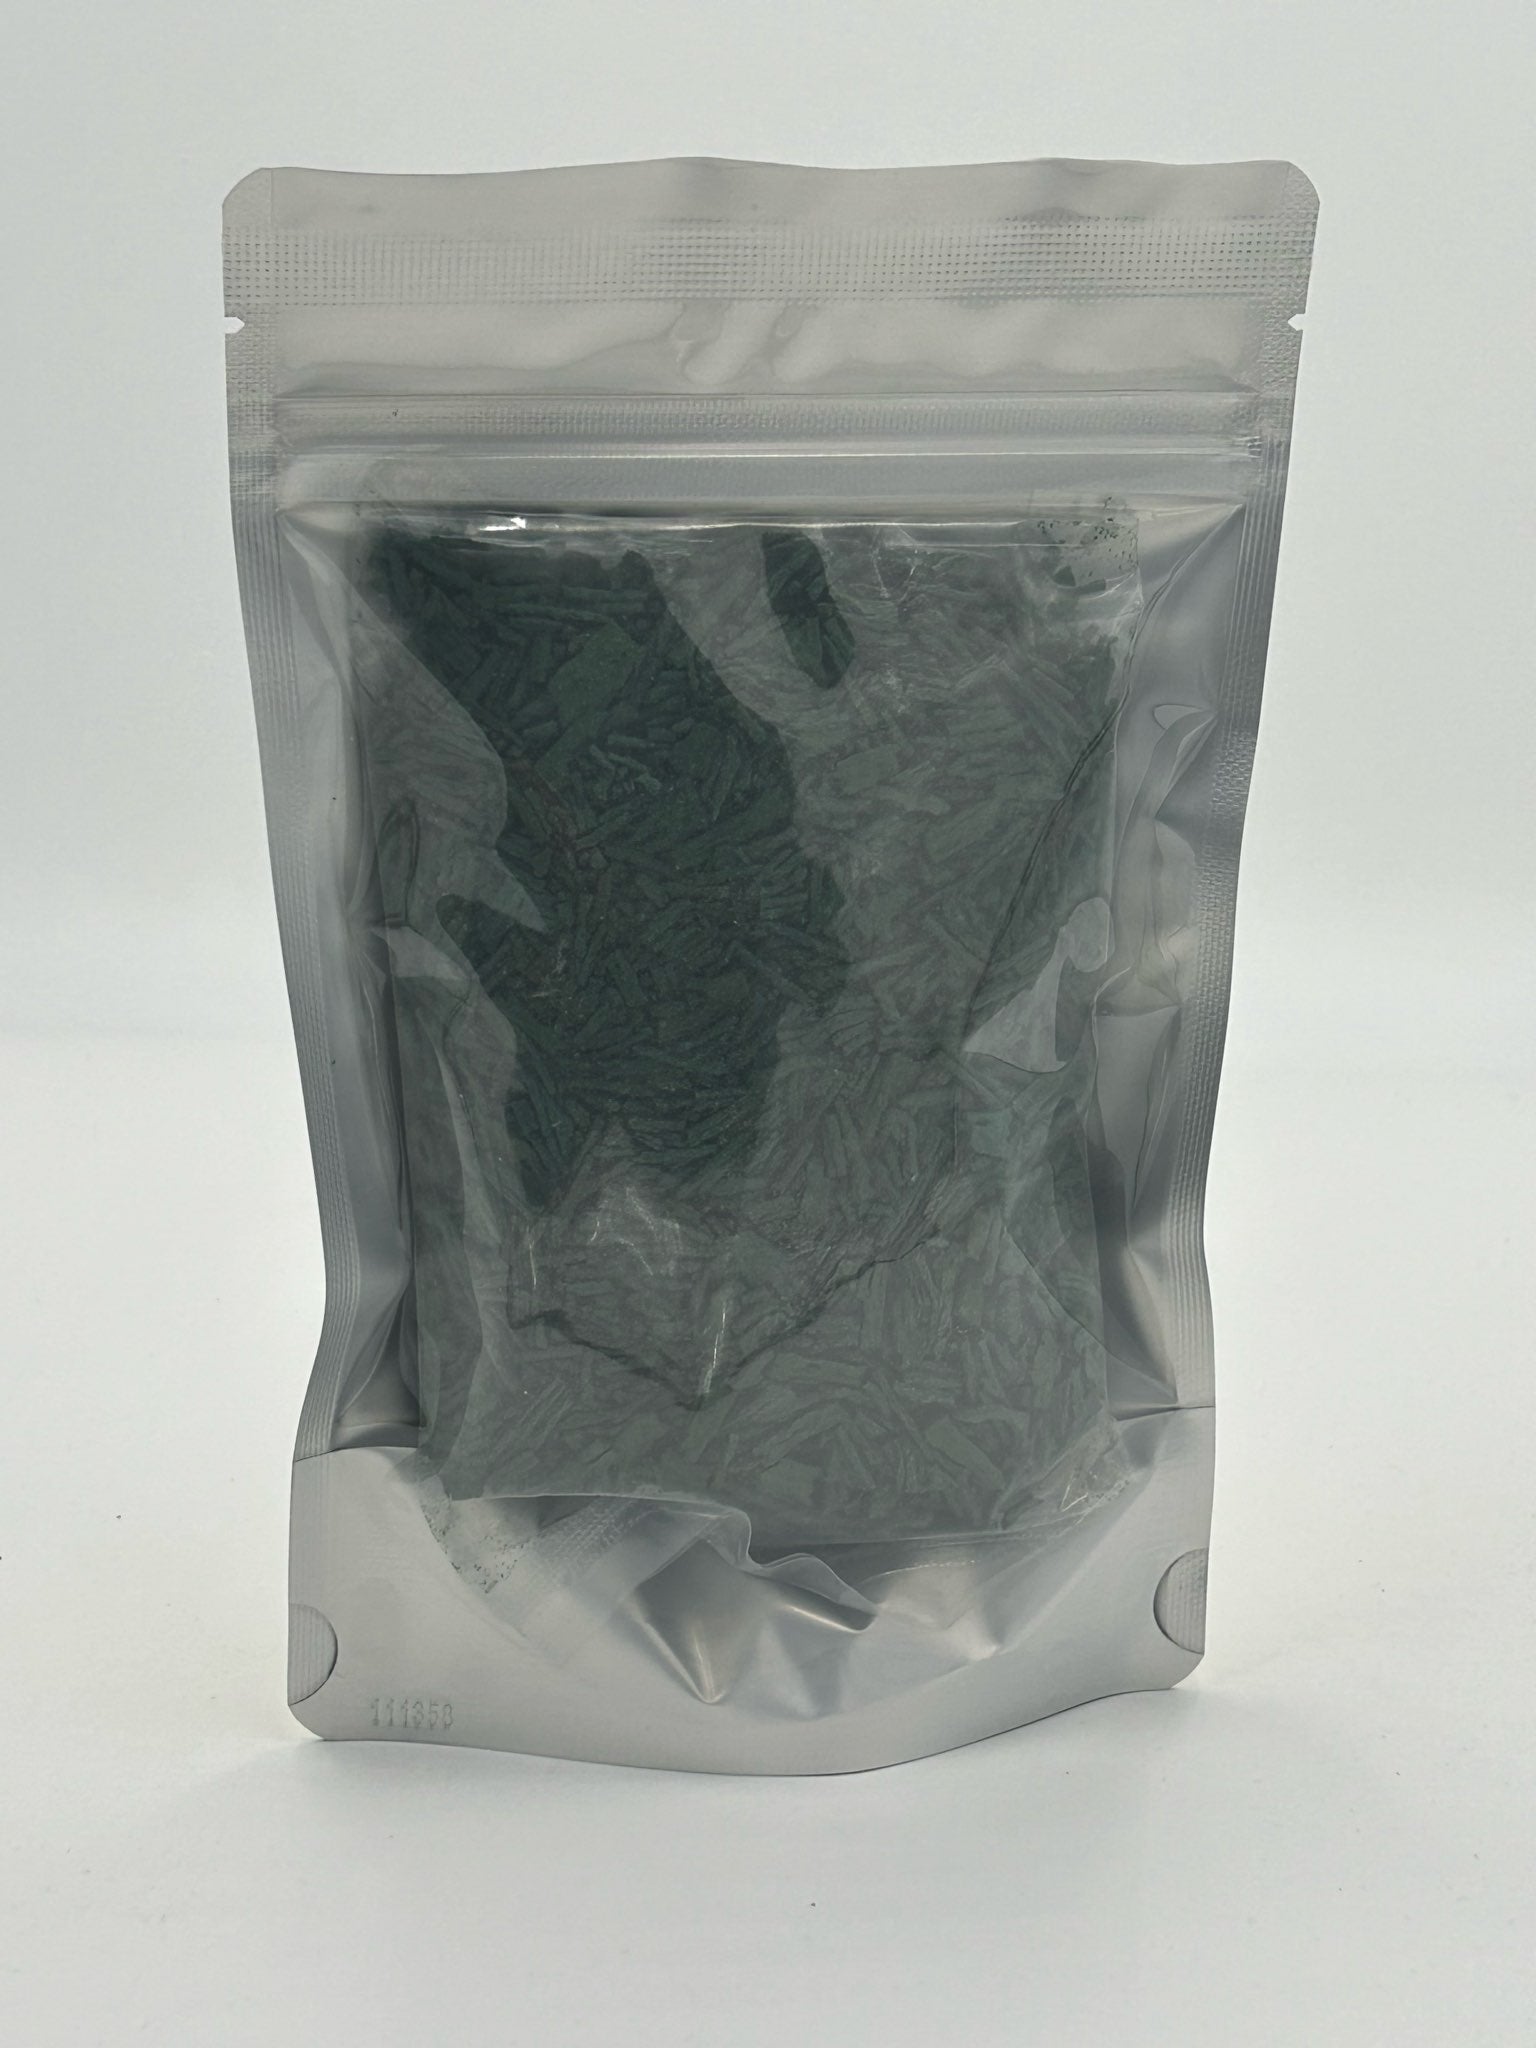 Spirulina Crispies (Raw, Vegan Grown) 100 g - Natural Zing